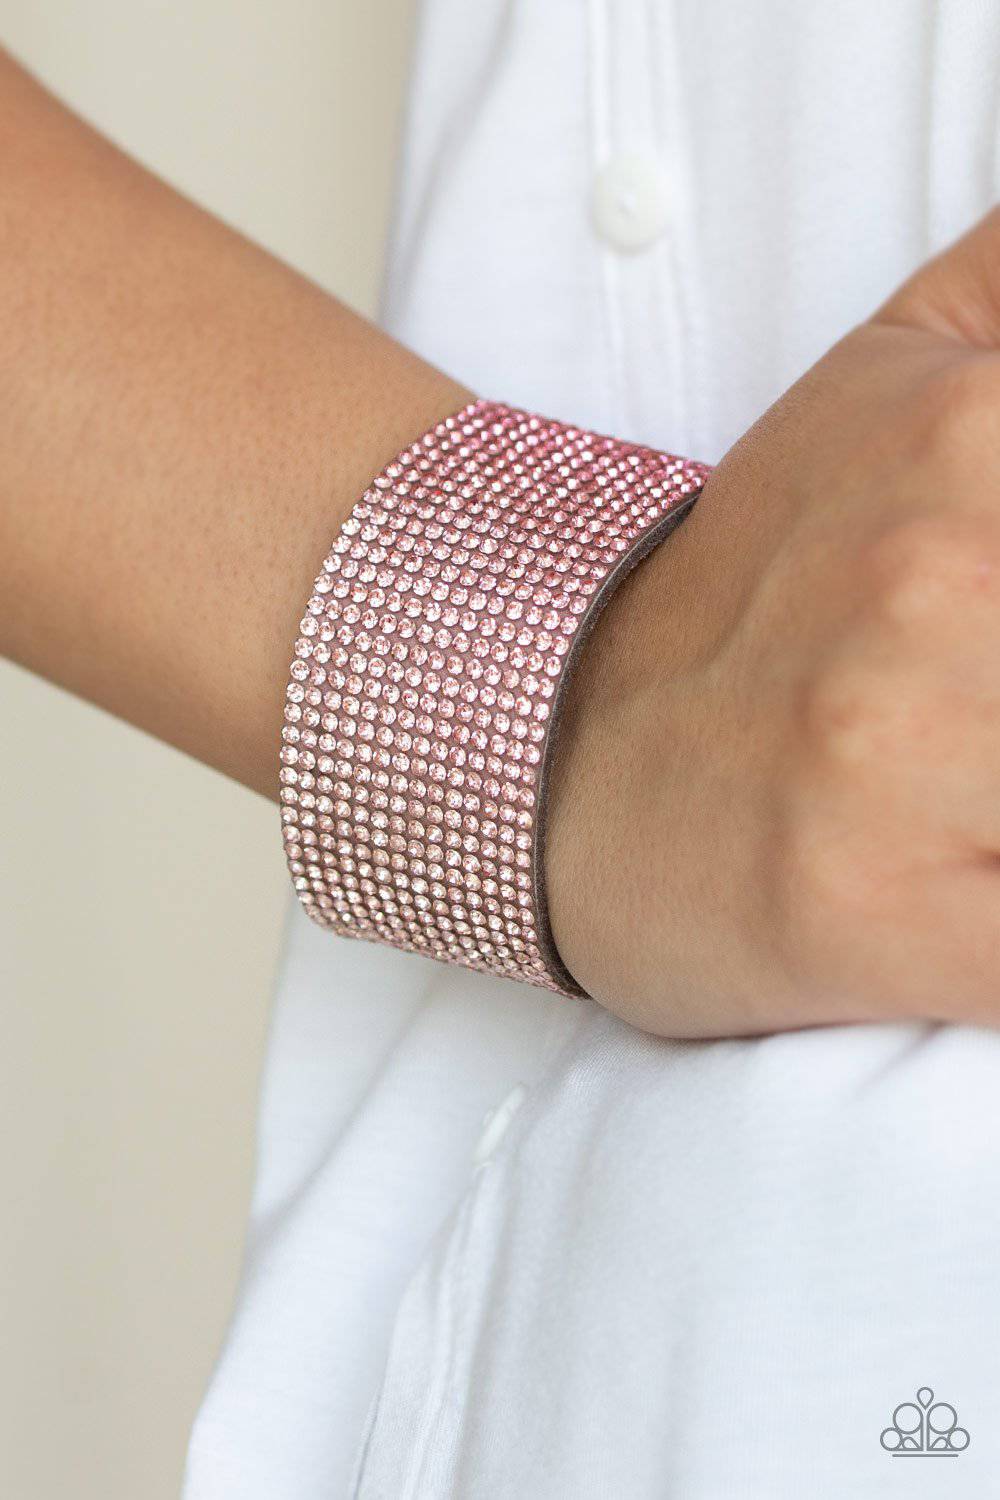 Fade Out - Pink Rhinestone Wrap Bracelet - Paparazzi Accessories - GlaMarous Titi Jewels